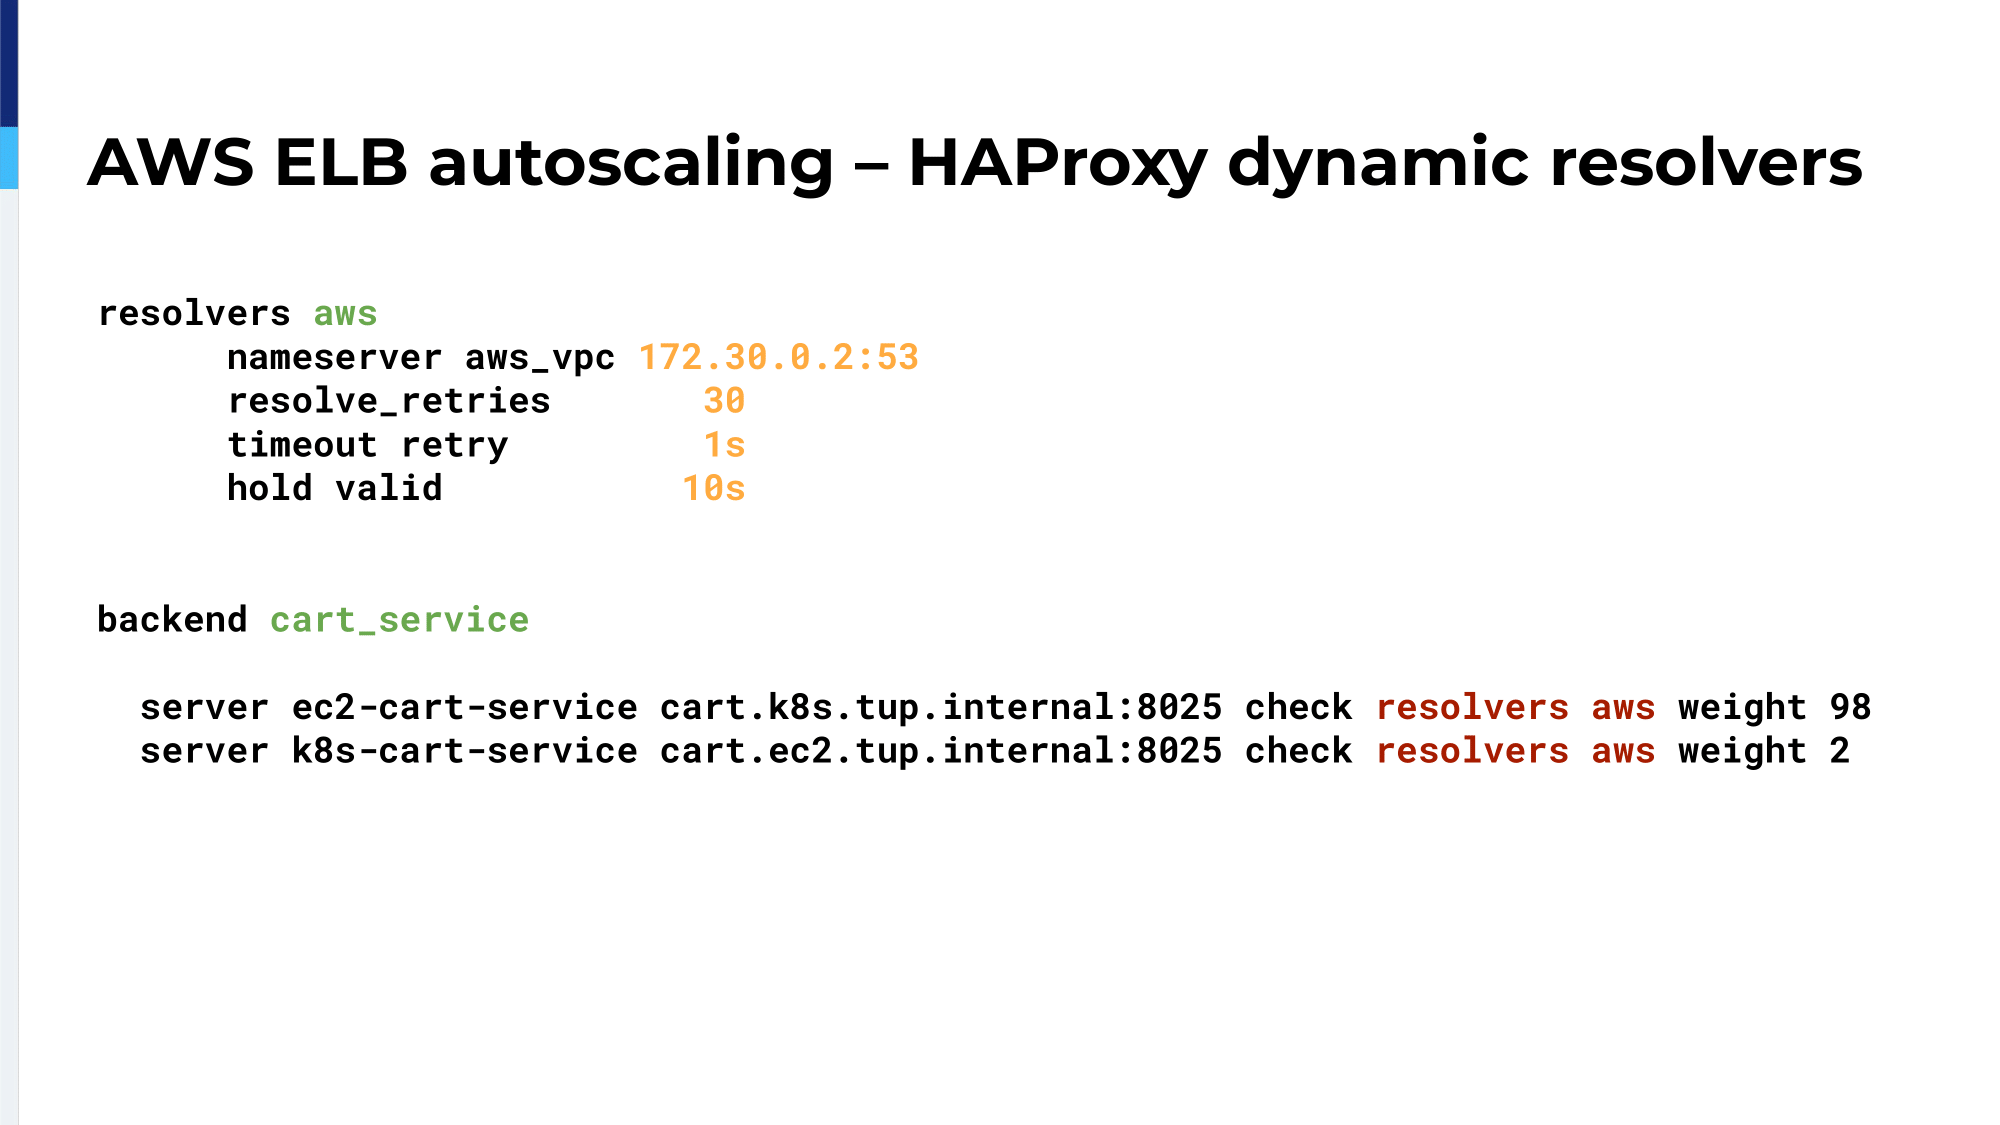 17.-aws-elb-autoscaling--haproxy-dynamic-resolvers